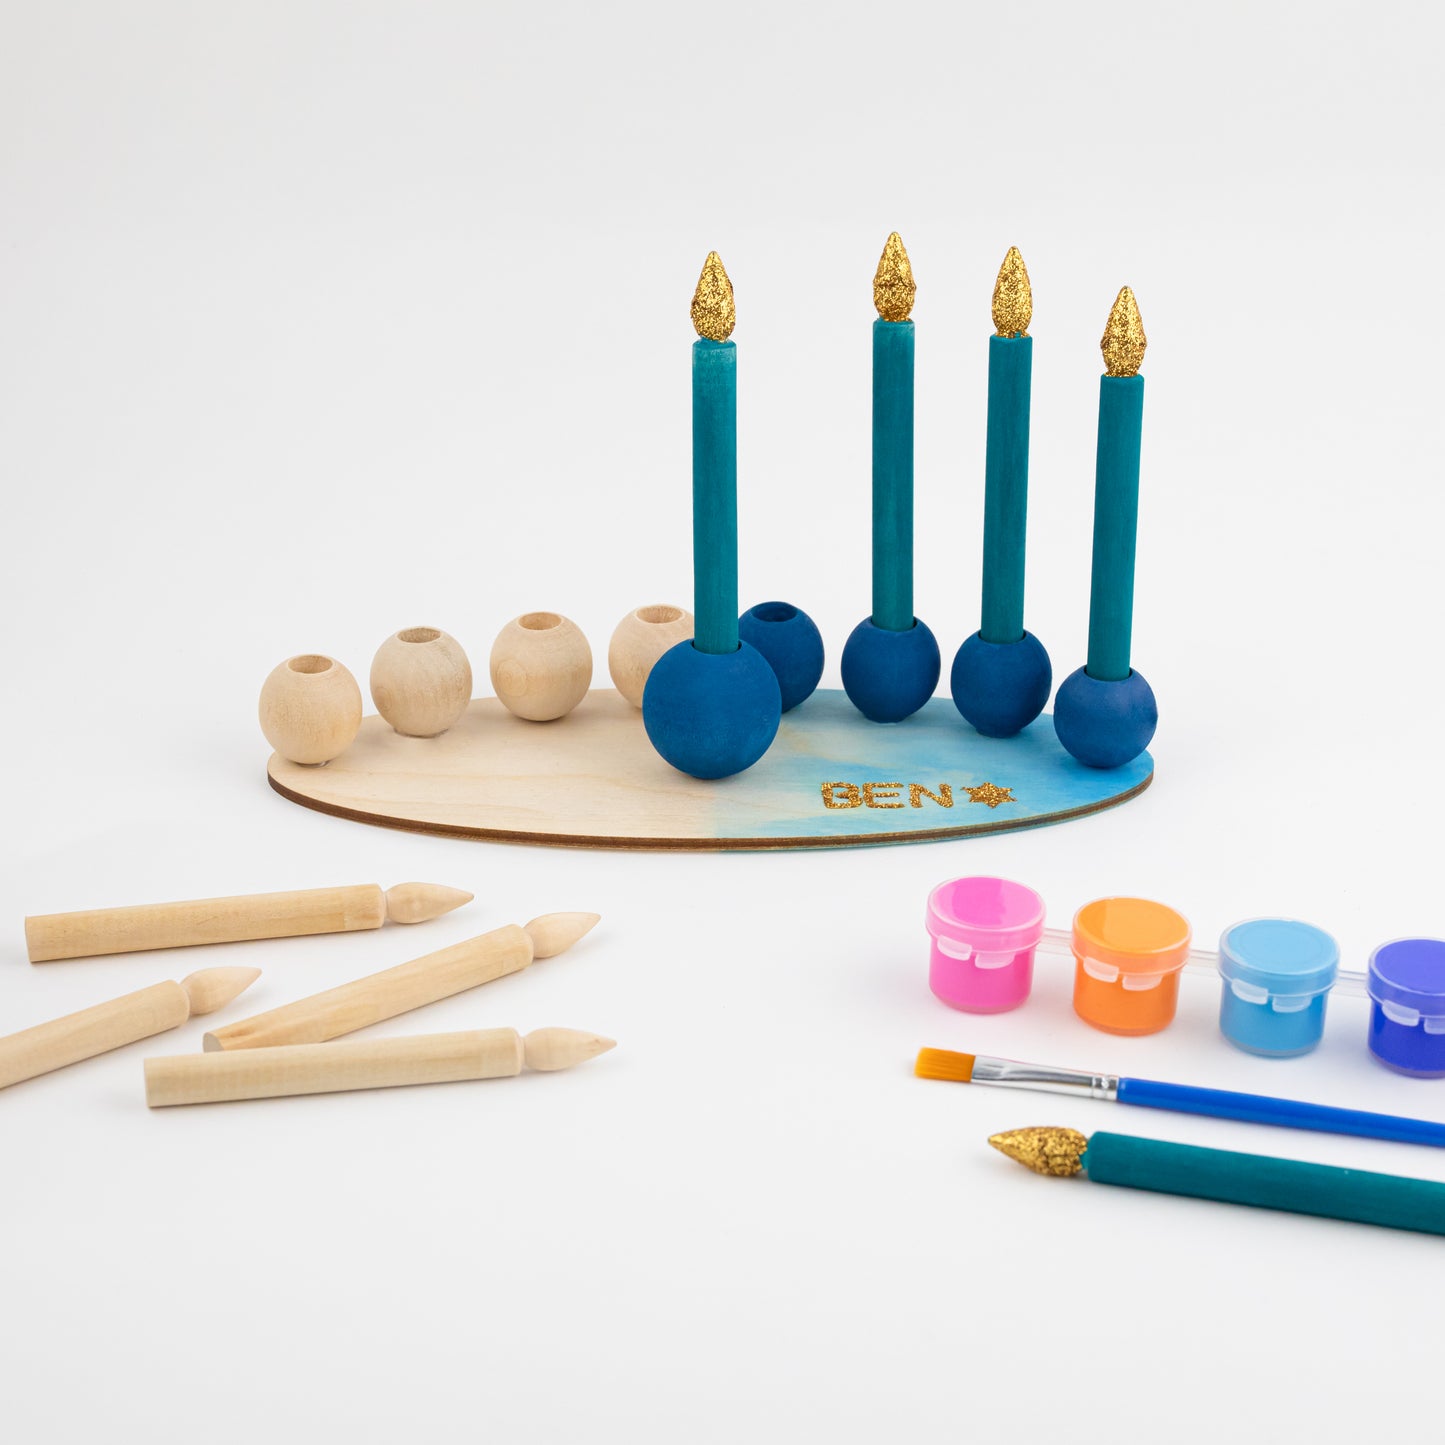 "My DIY Menorah Kit: Discover What's Inside. ALT: Open box revealing kit components for creating a personalized menorah. Wooden play menorah elegantly assembled in the backdrop, inspiring Hanukkah creativity."